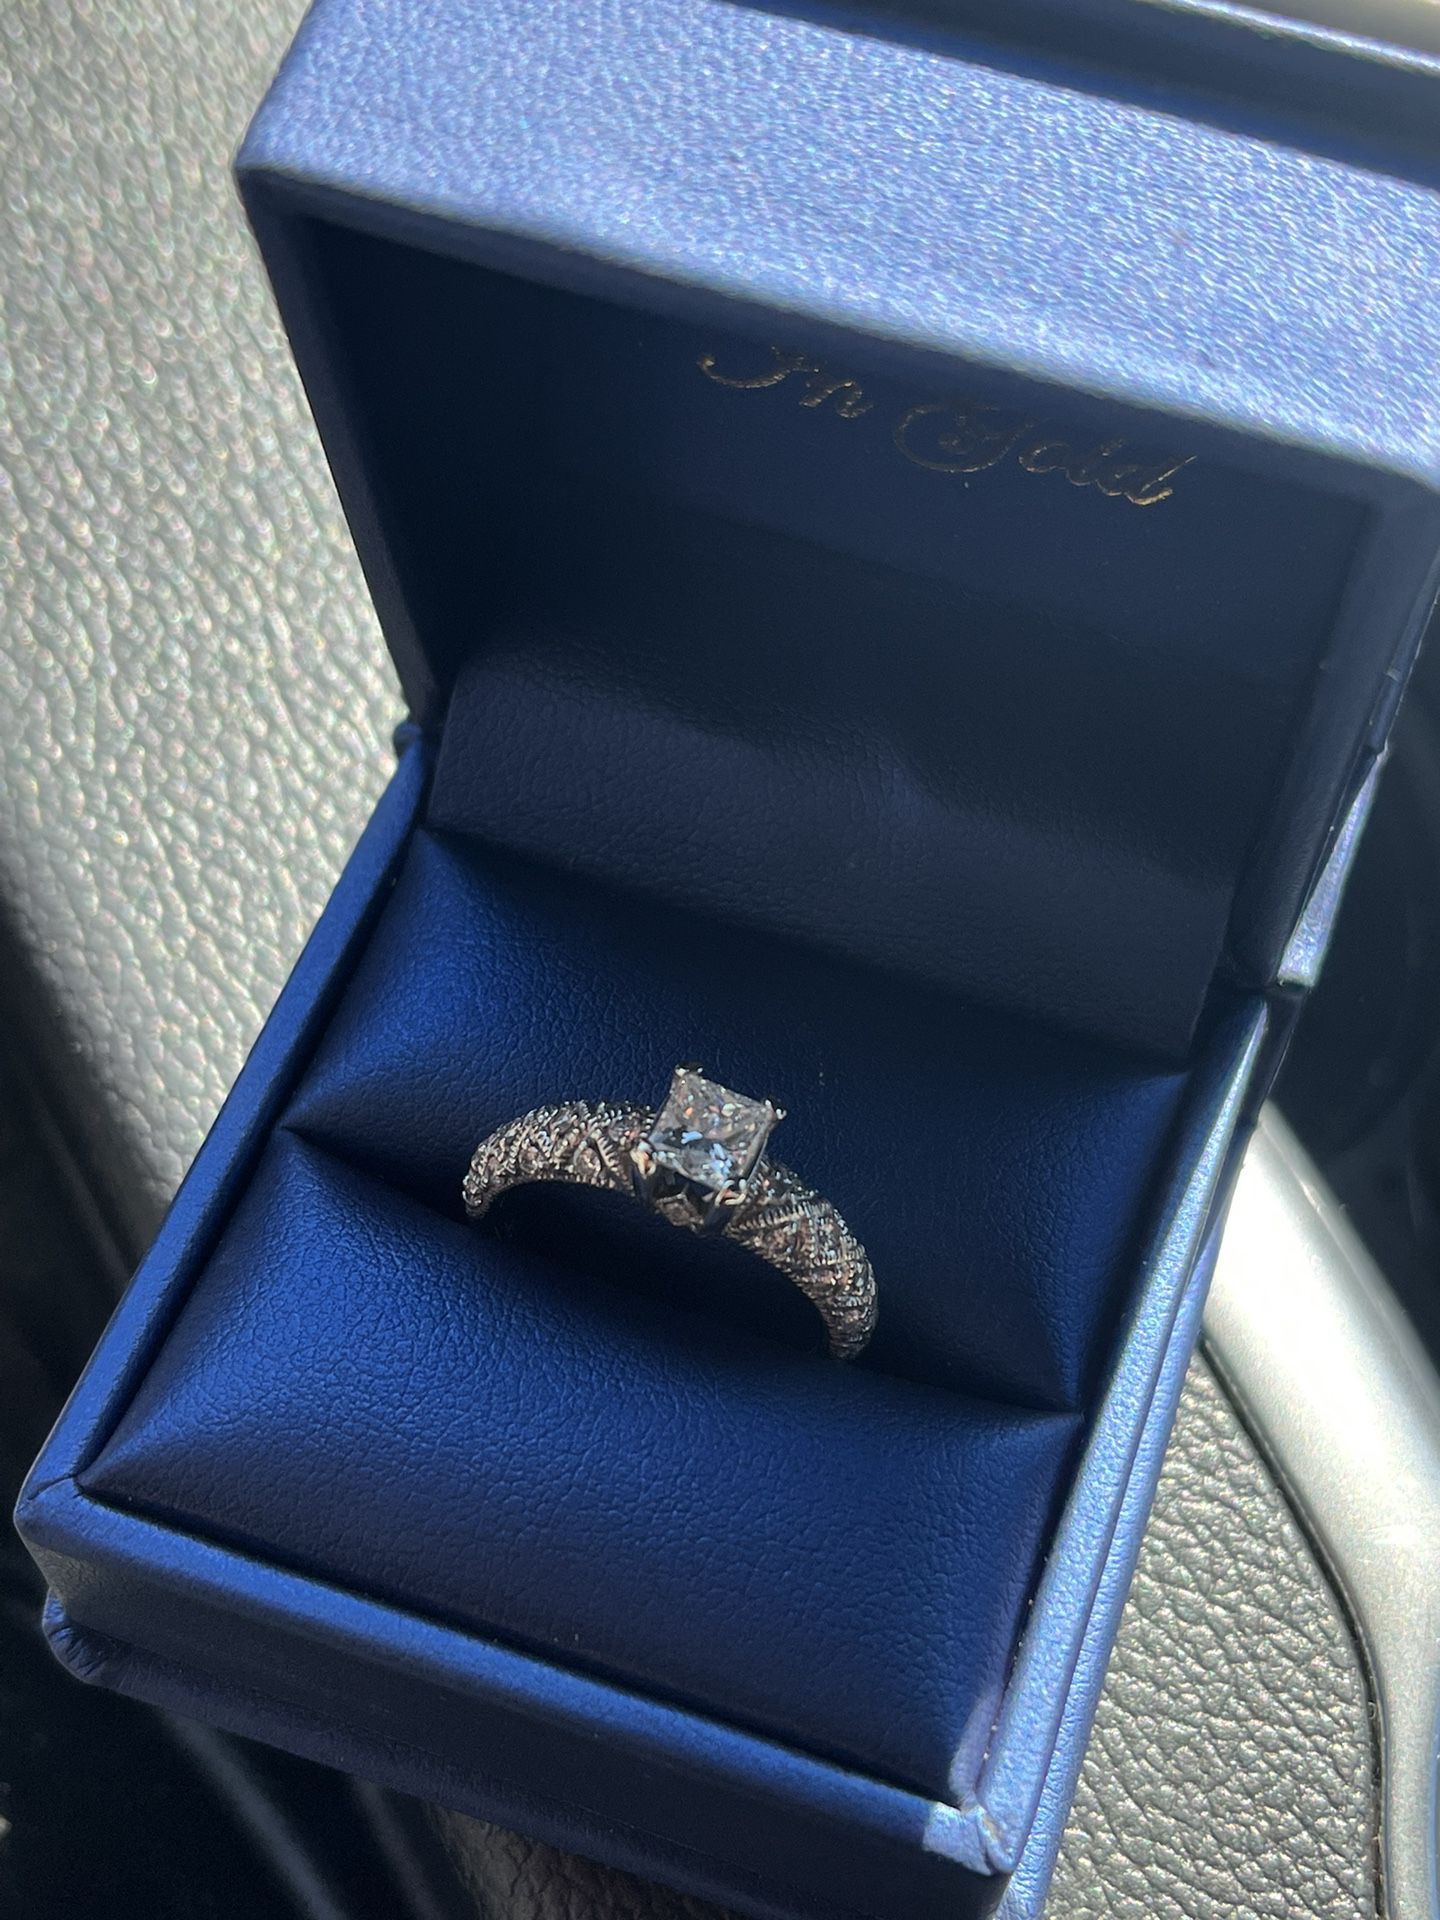 White Gold Diamond Engagement Ring 